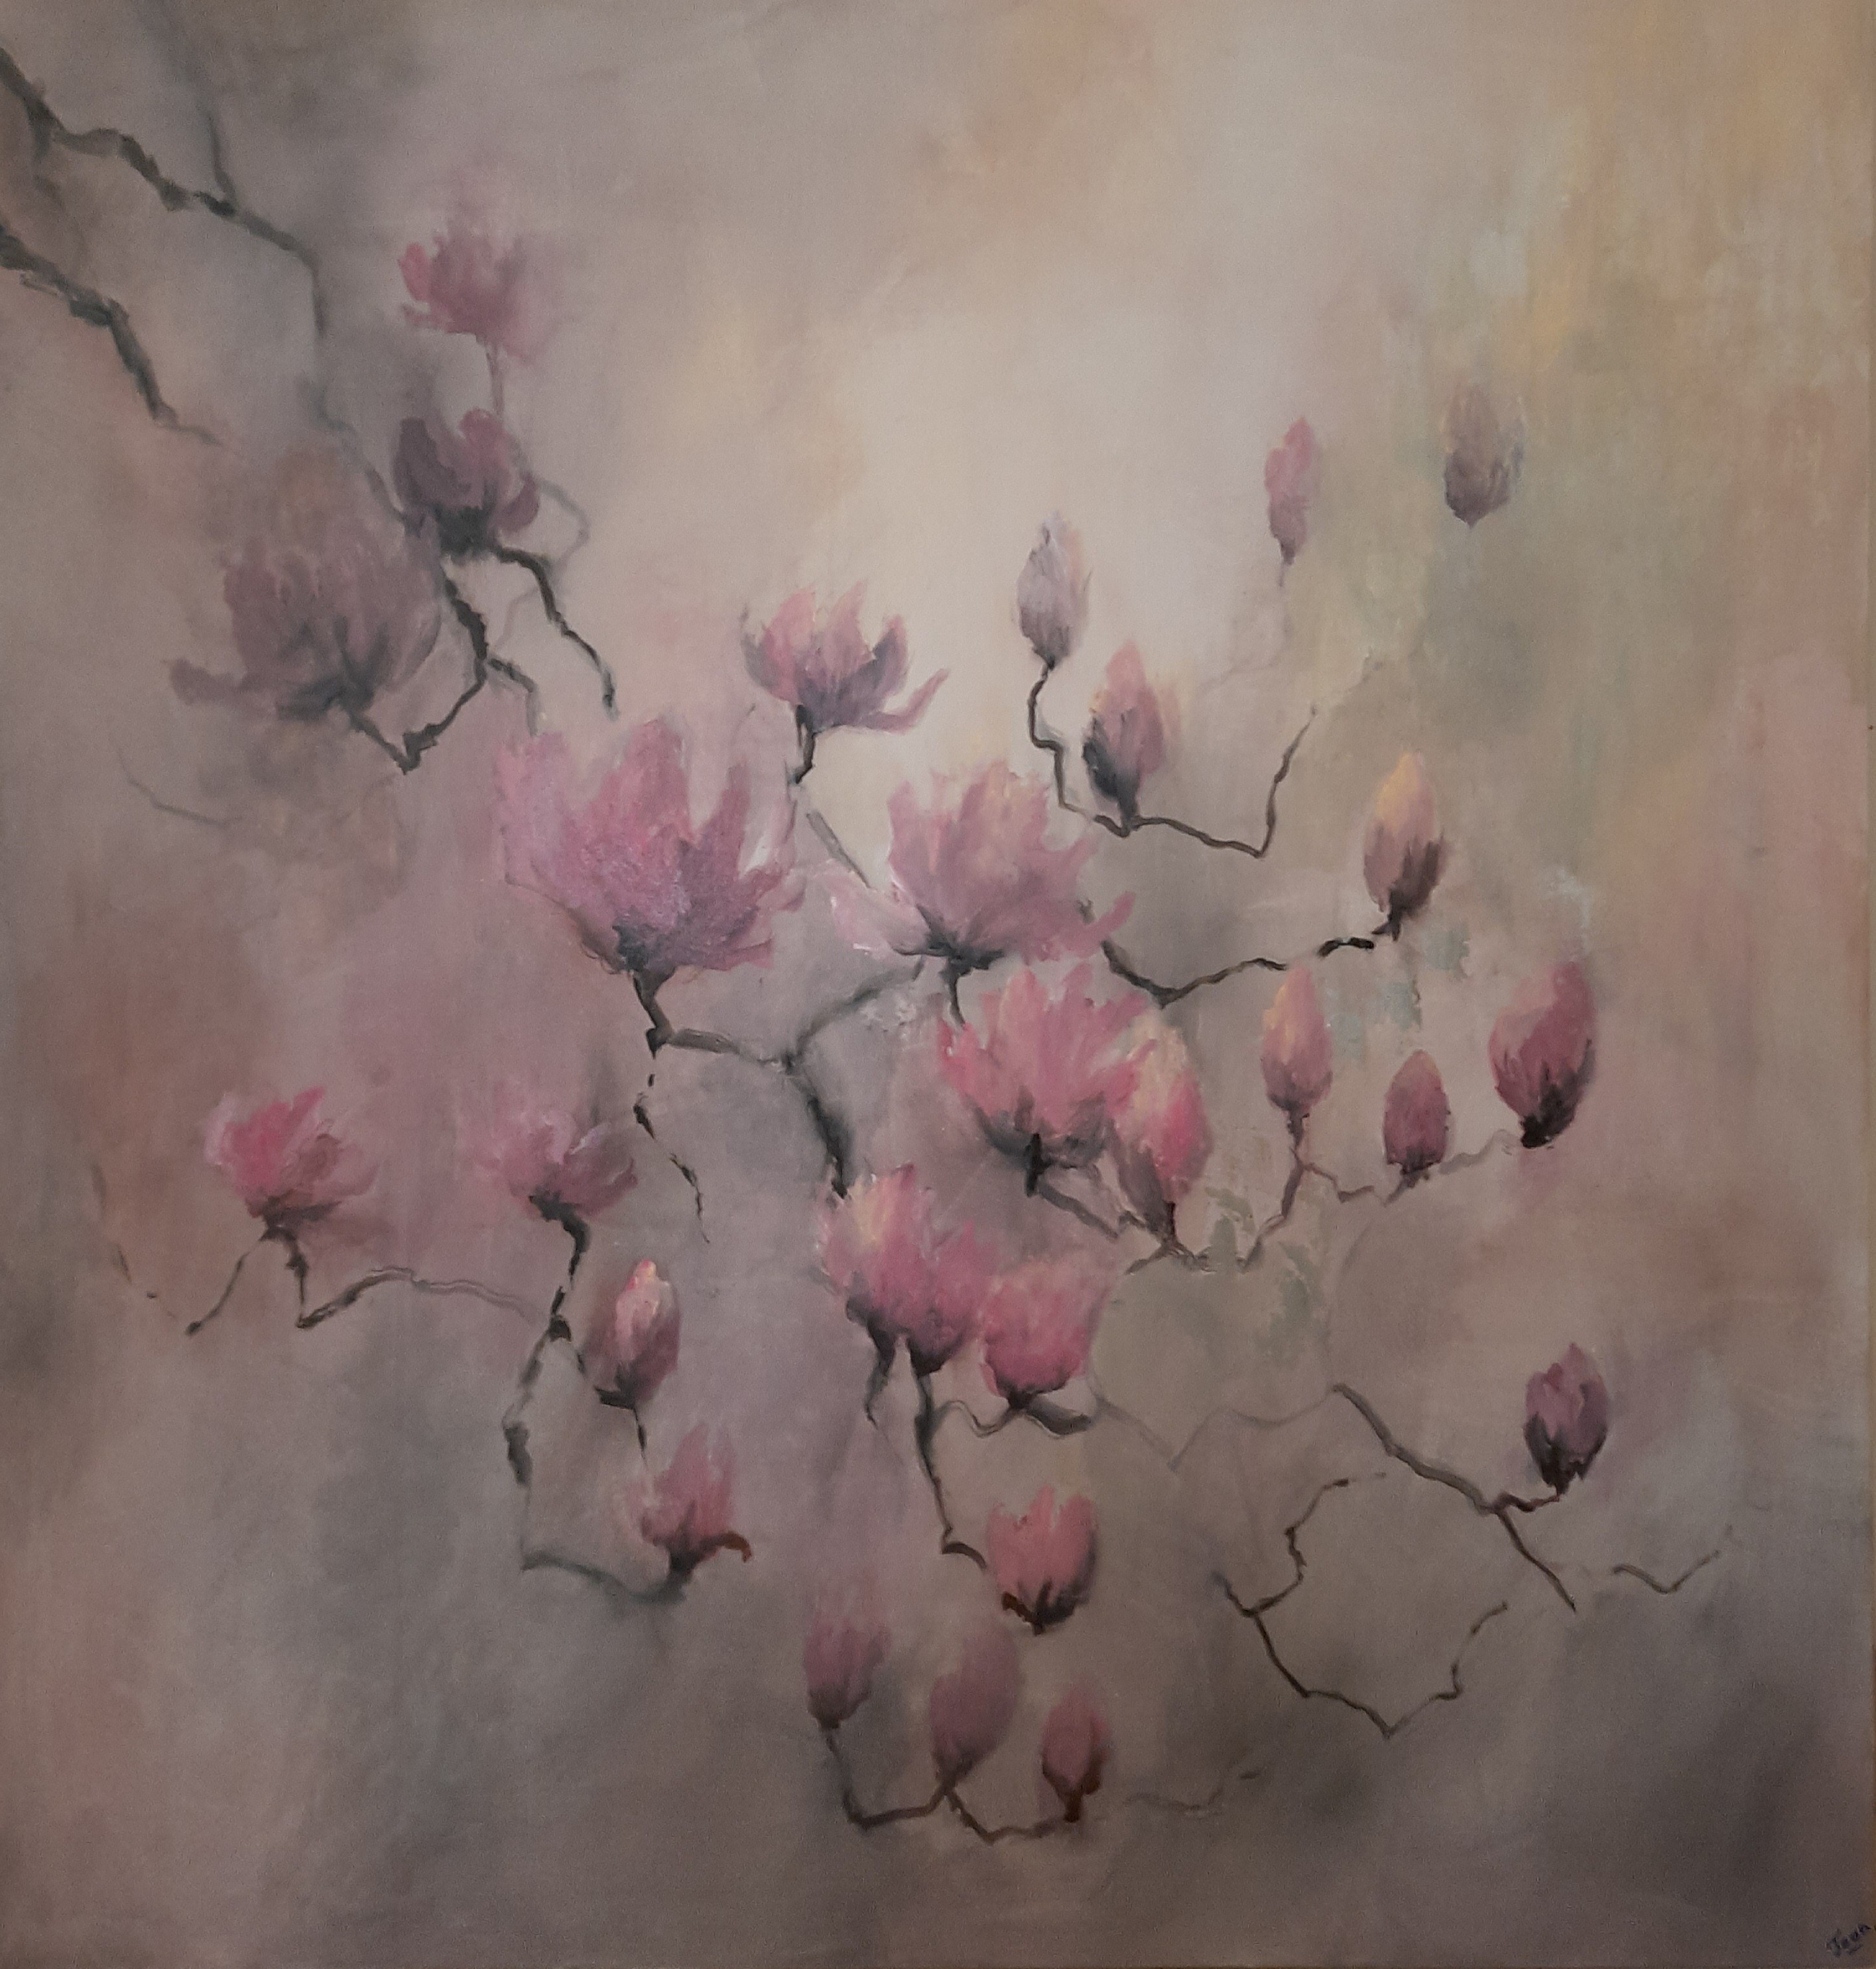 Sweet magnolias by Jean wijesekera